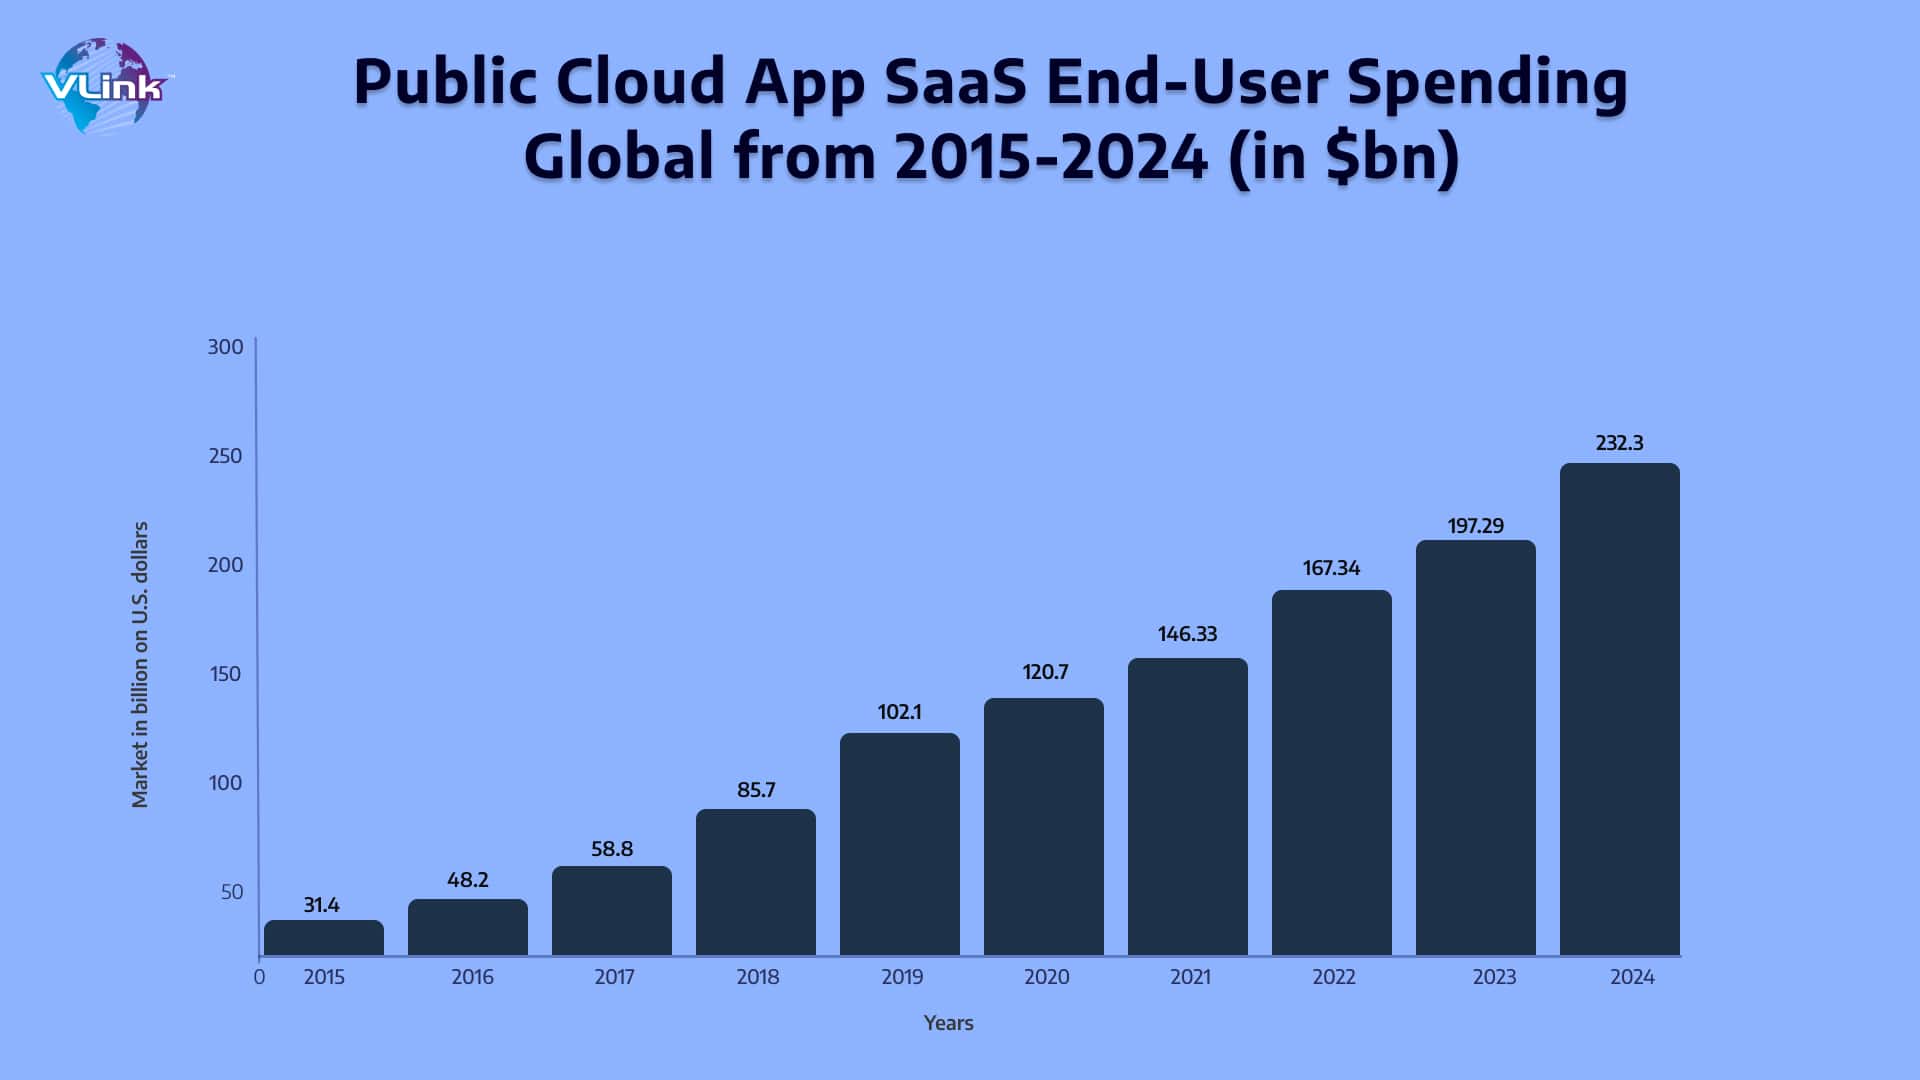 Public cloud app SaaS end-user spending worldwide